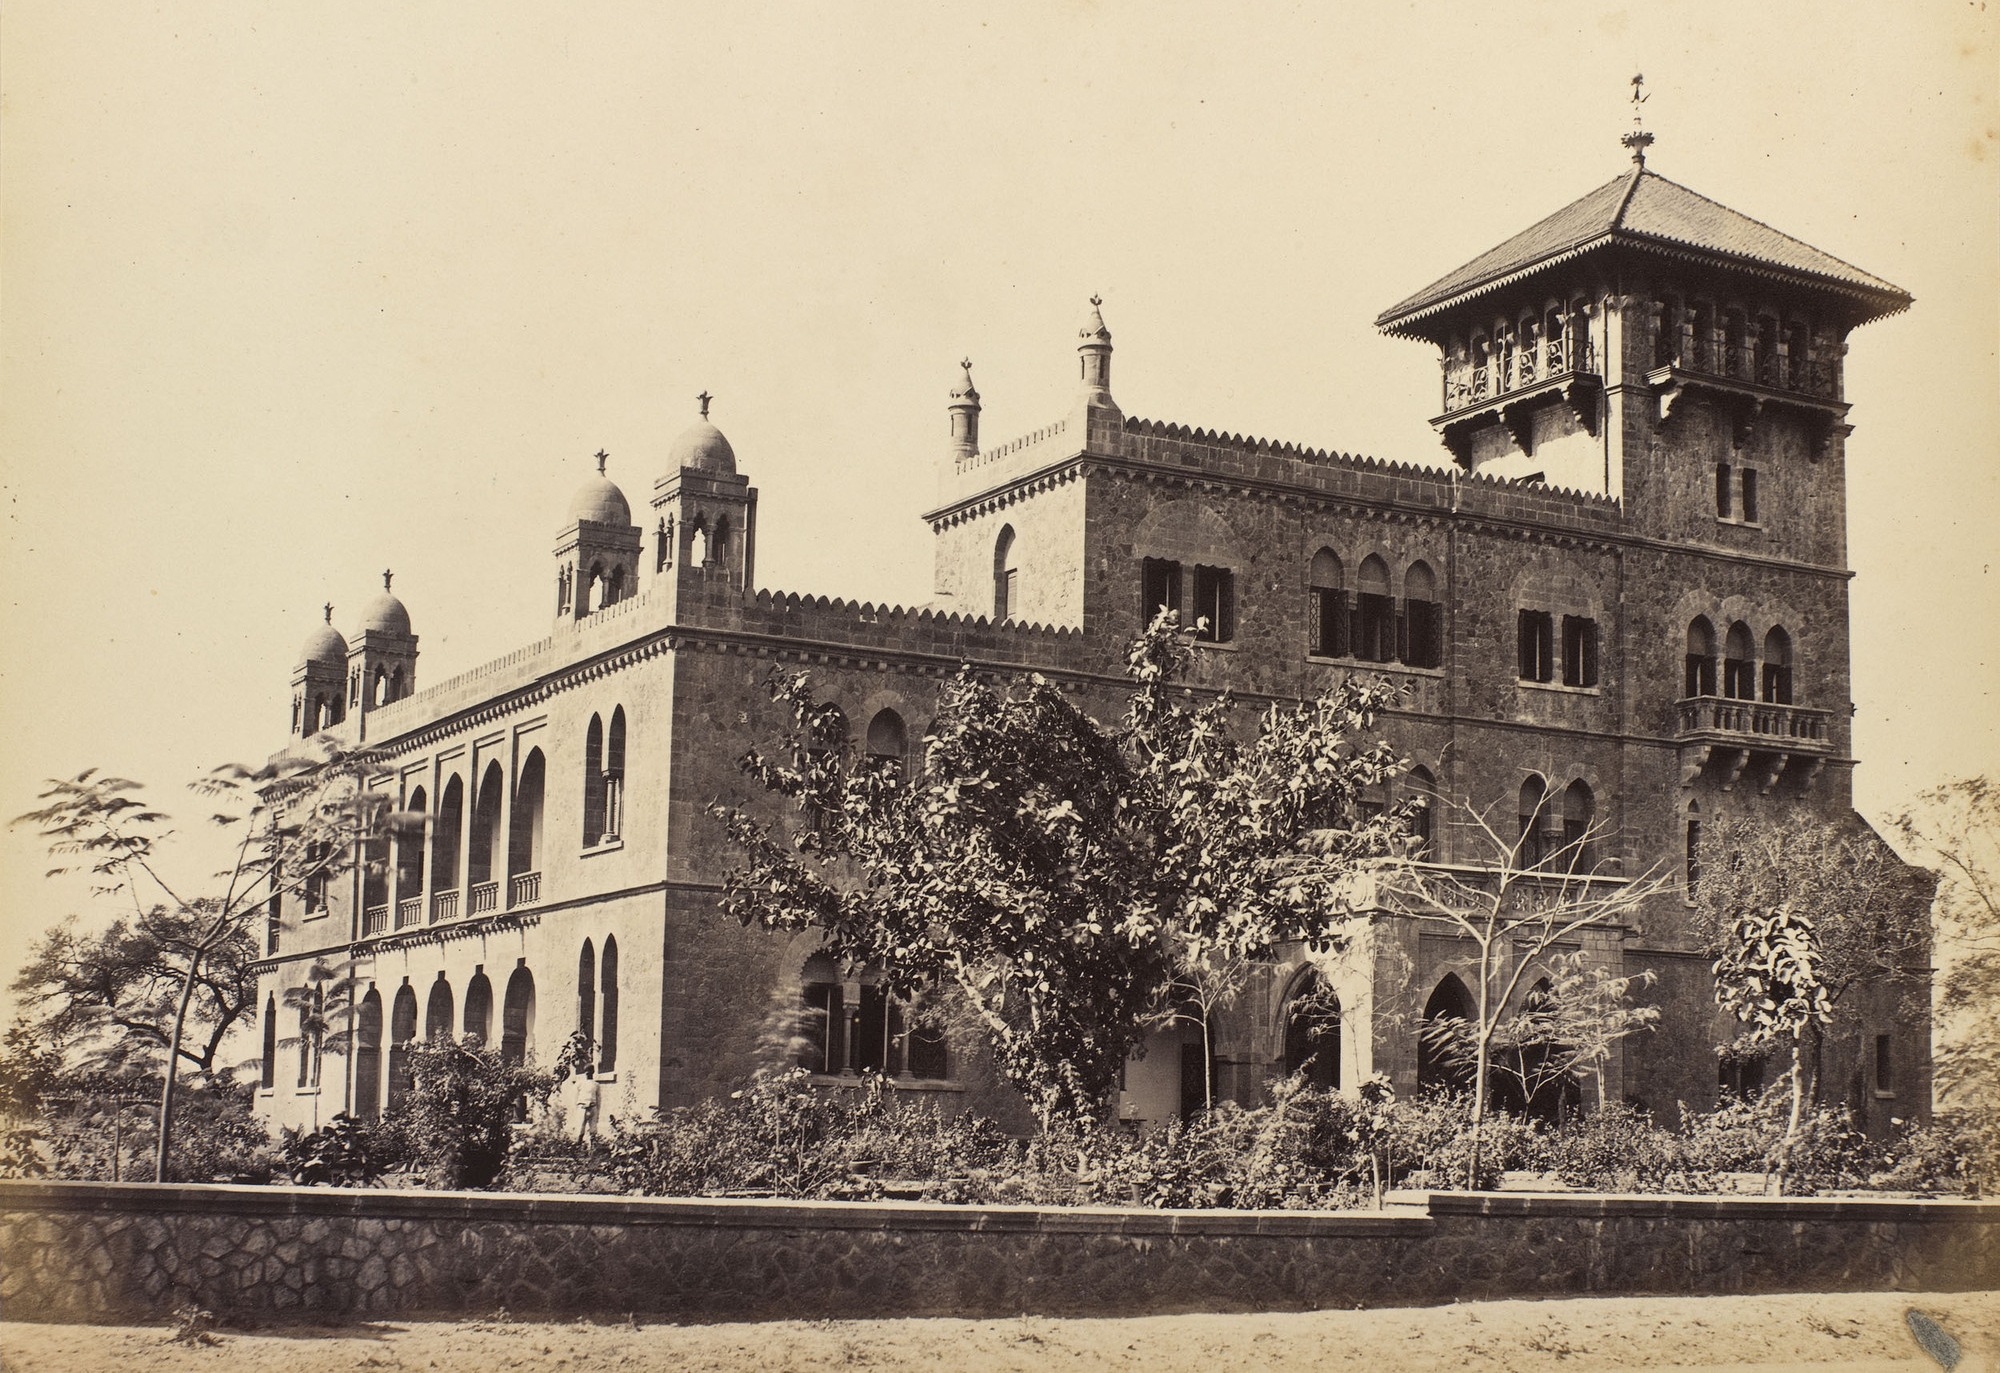 College of Engineering (COEP Technological University), Pune (Poona), Maharashtra, India | Rare & Old Vintage Photos (1870)